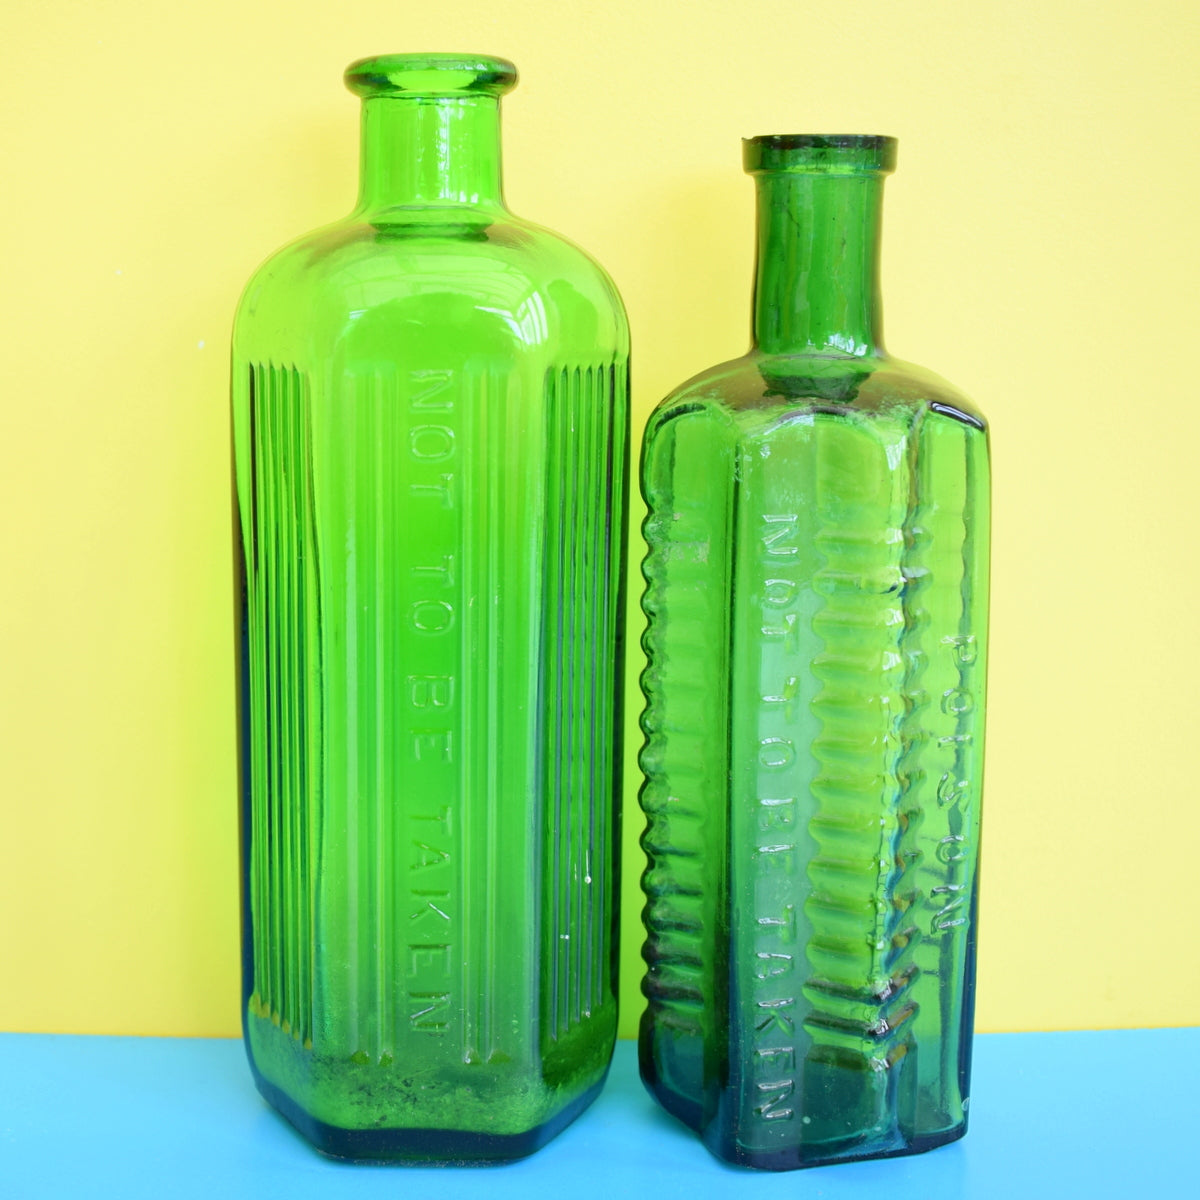 Vintage 1920s Glass Poison Bottles - Emerald Green - Great Bud Vases For Flowers